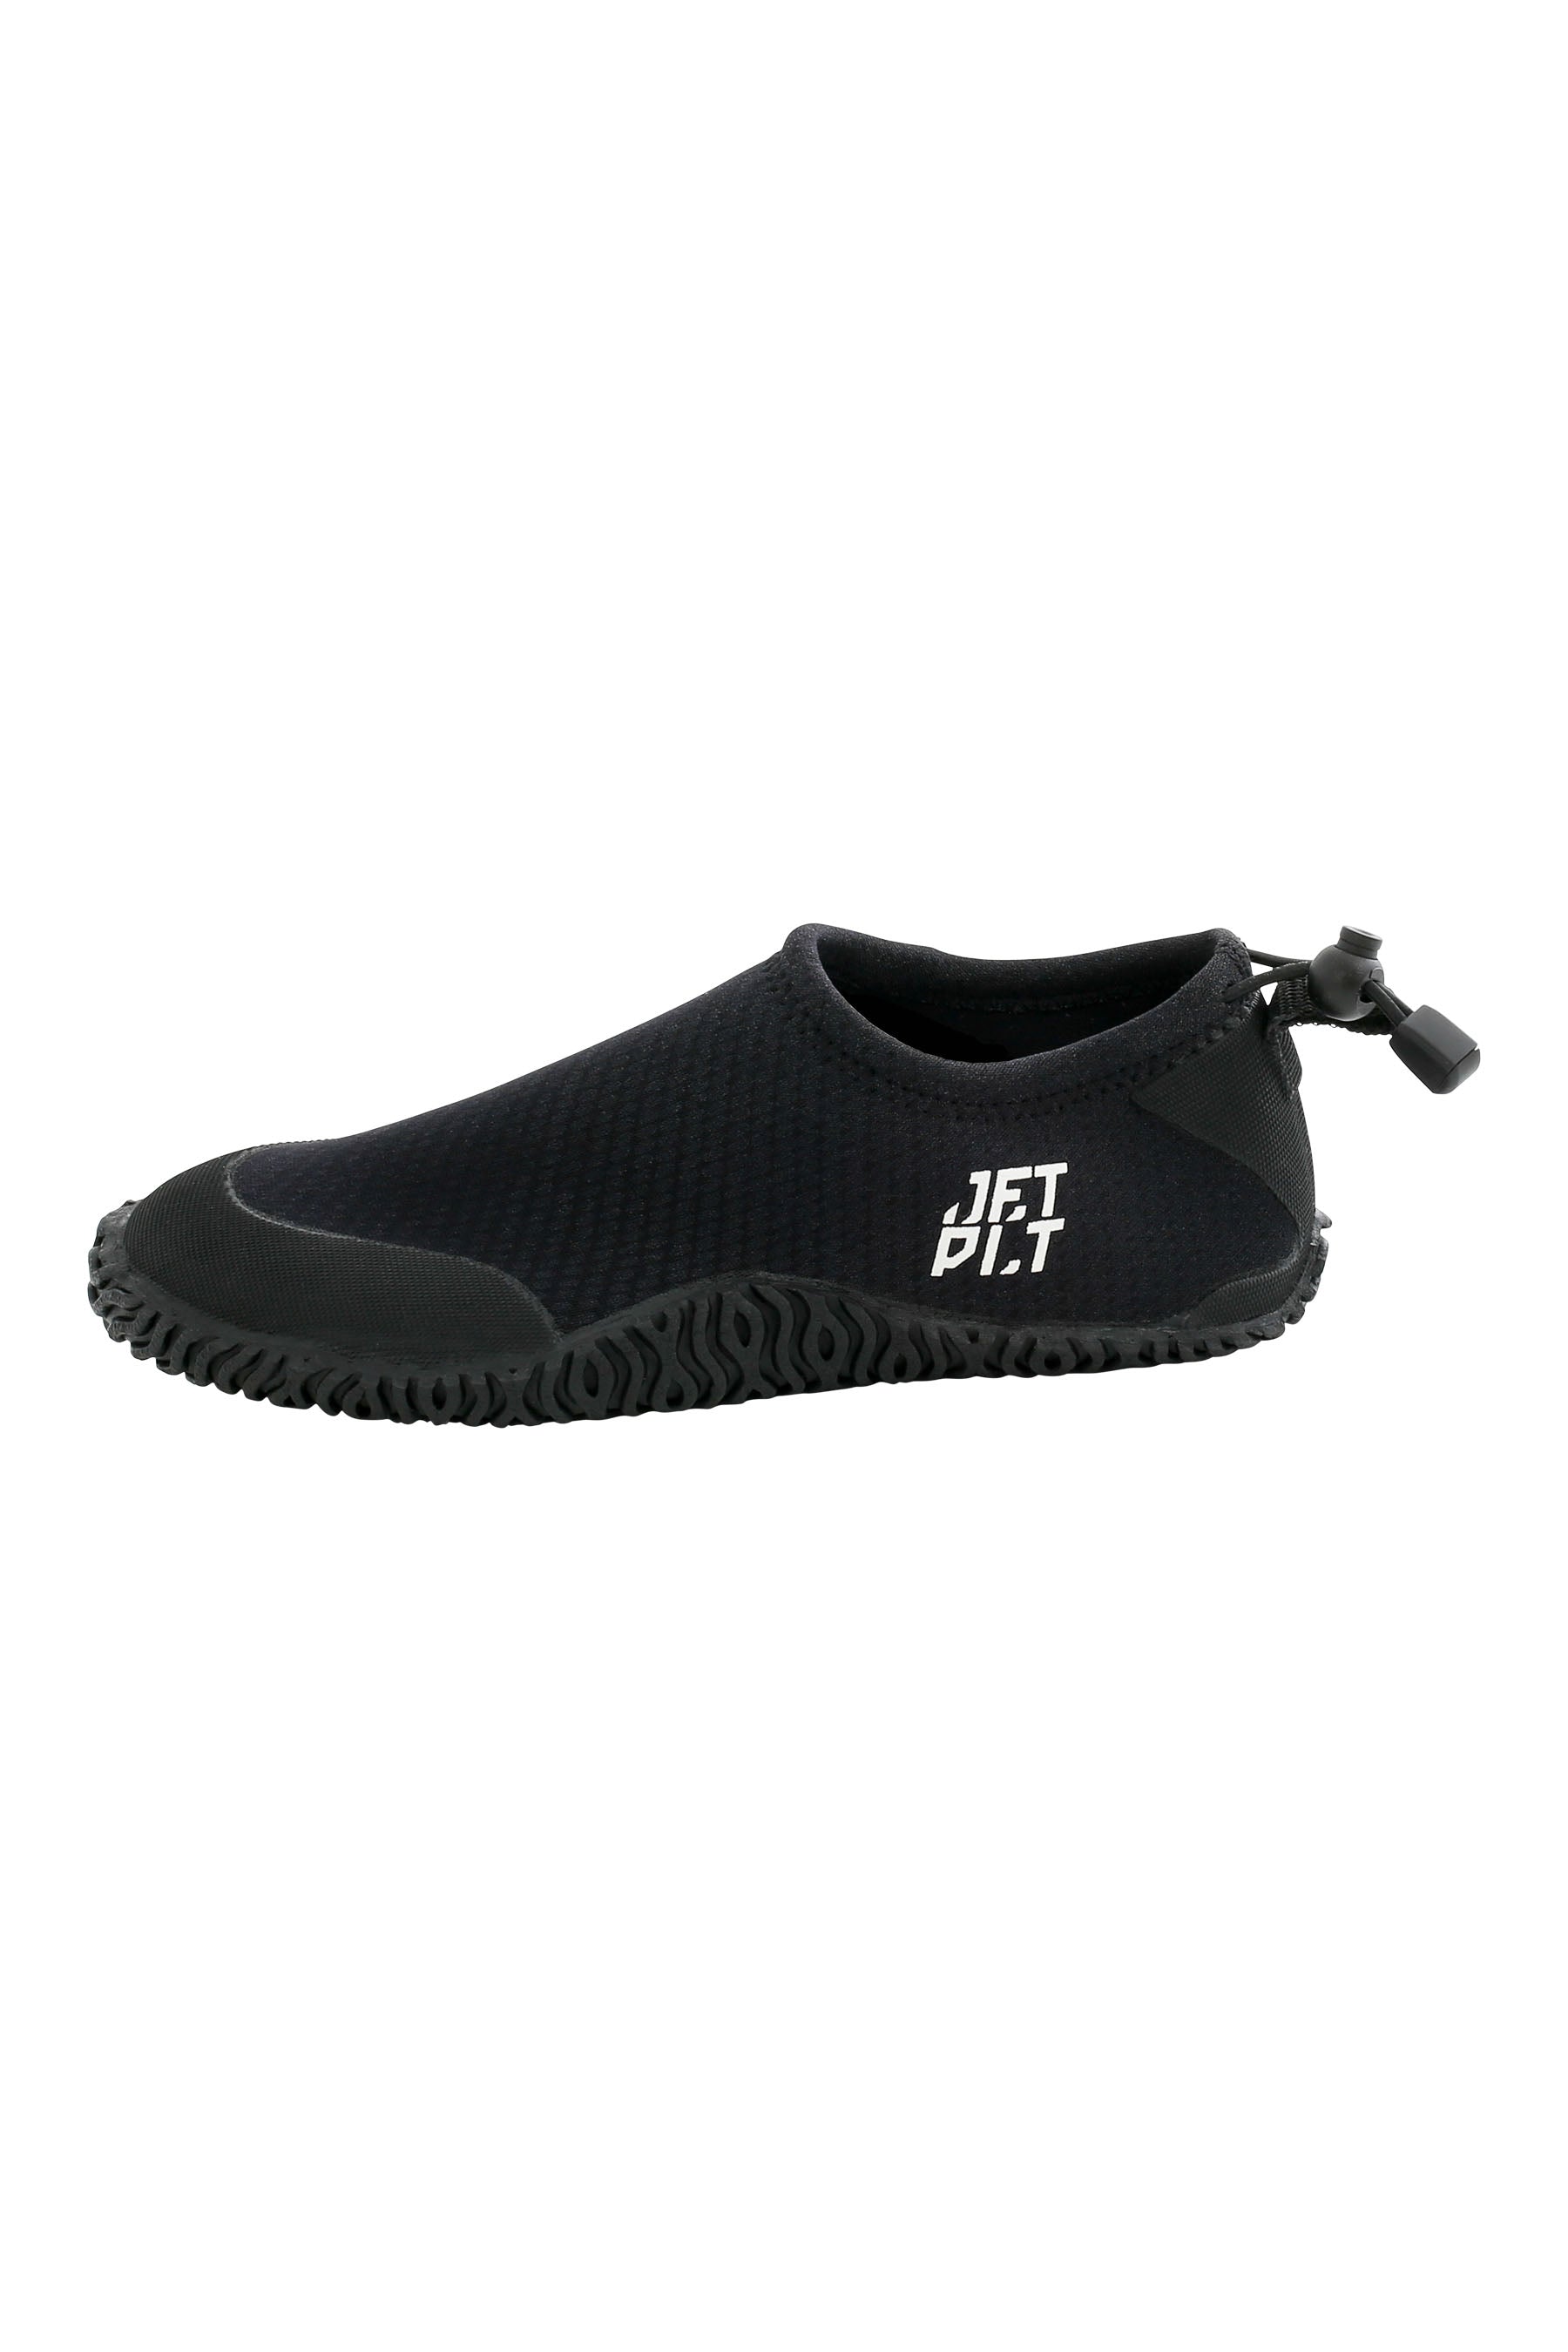 Jetpilot Hydro Shoe Black 2